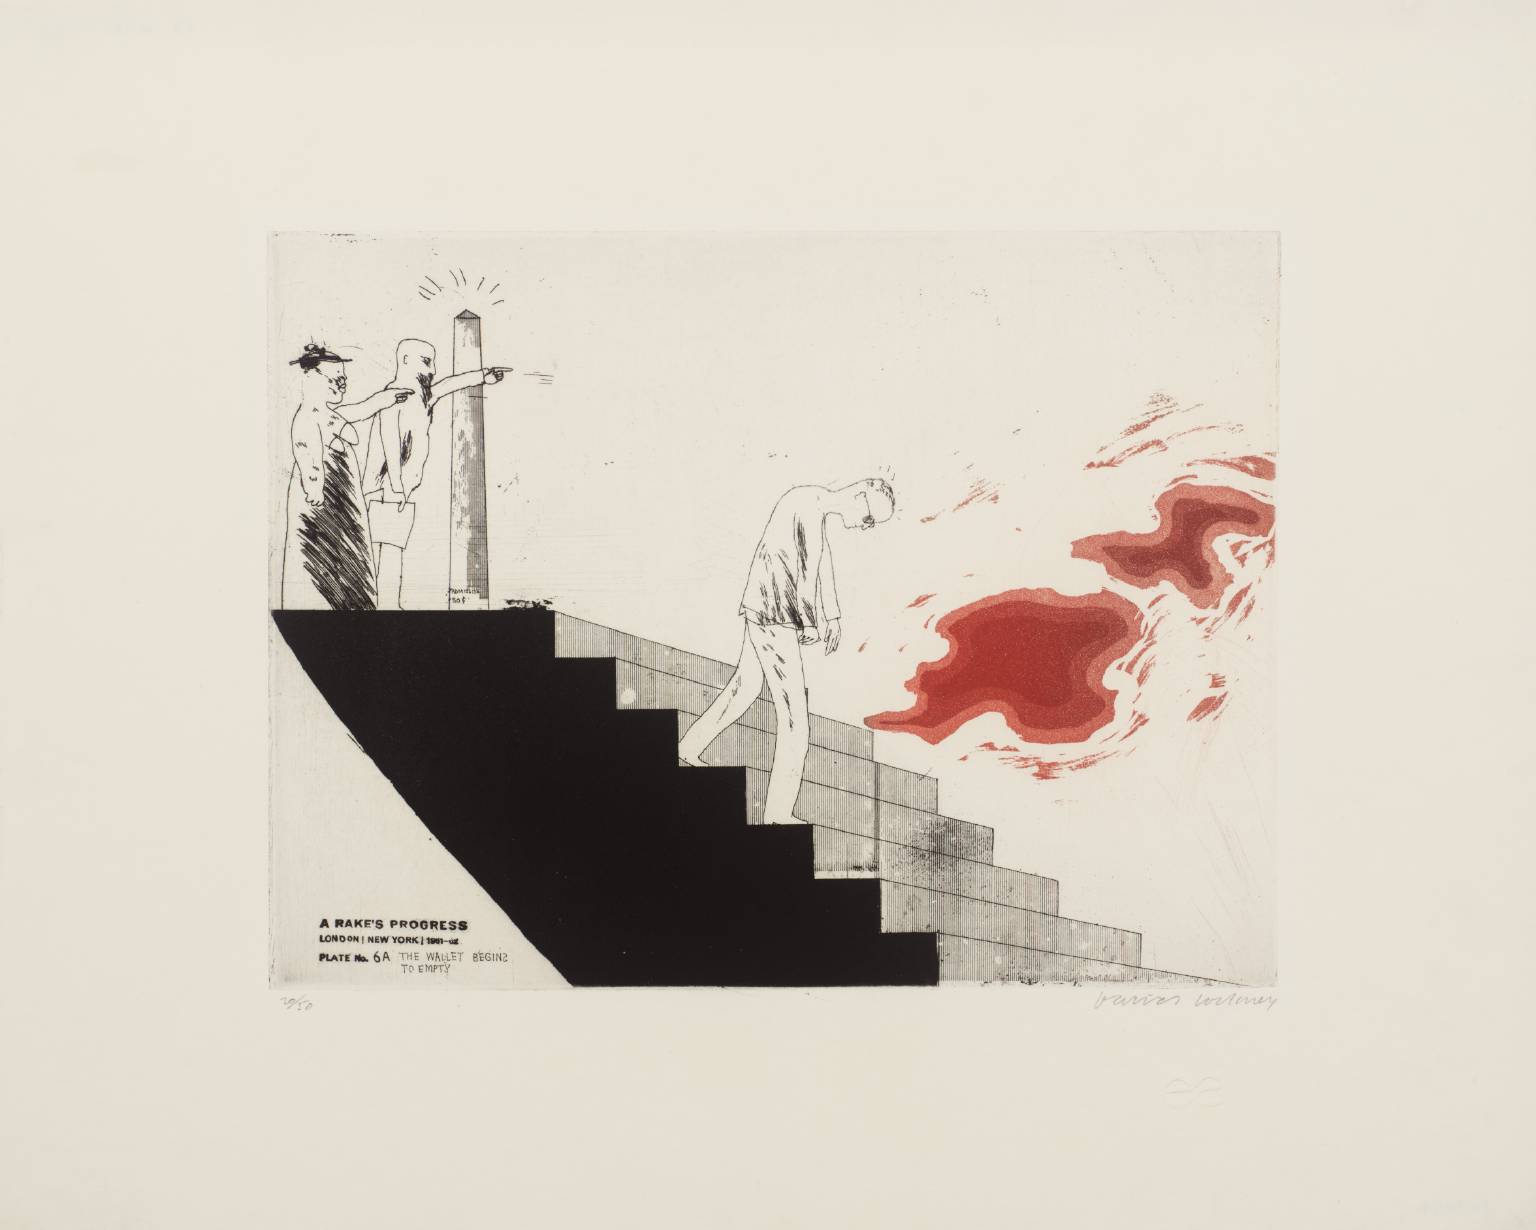 Tate modern gallry 소장 David Hockney prints (A Rake’s Progress 중 6a. The Wallet Begins to Empty(1961-3)).jpg